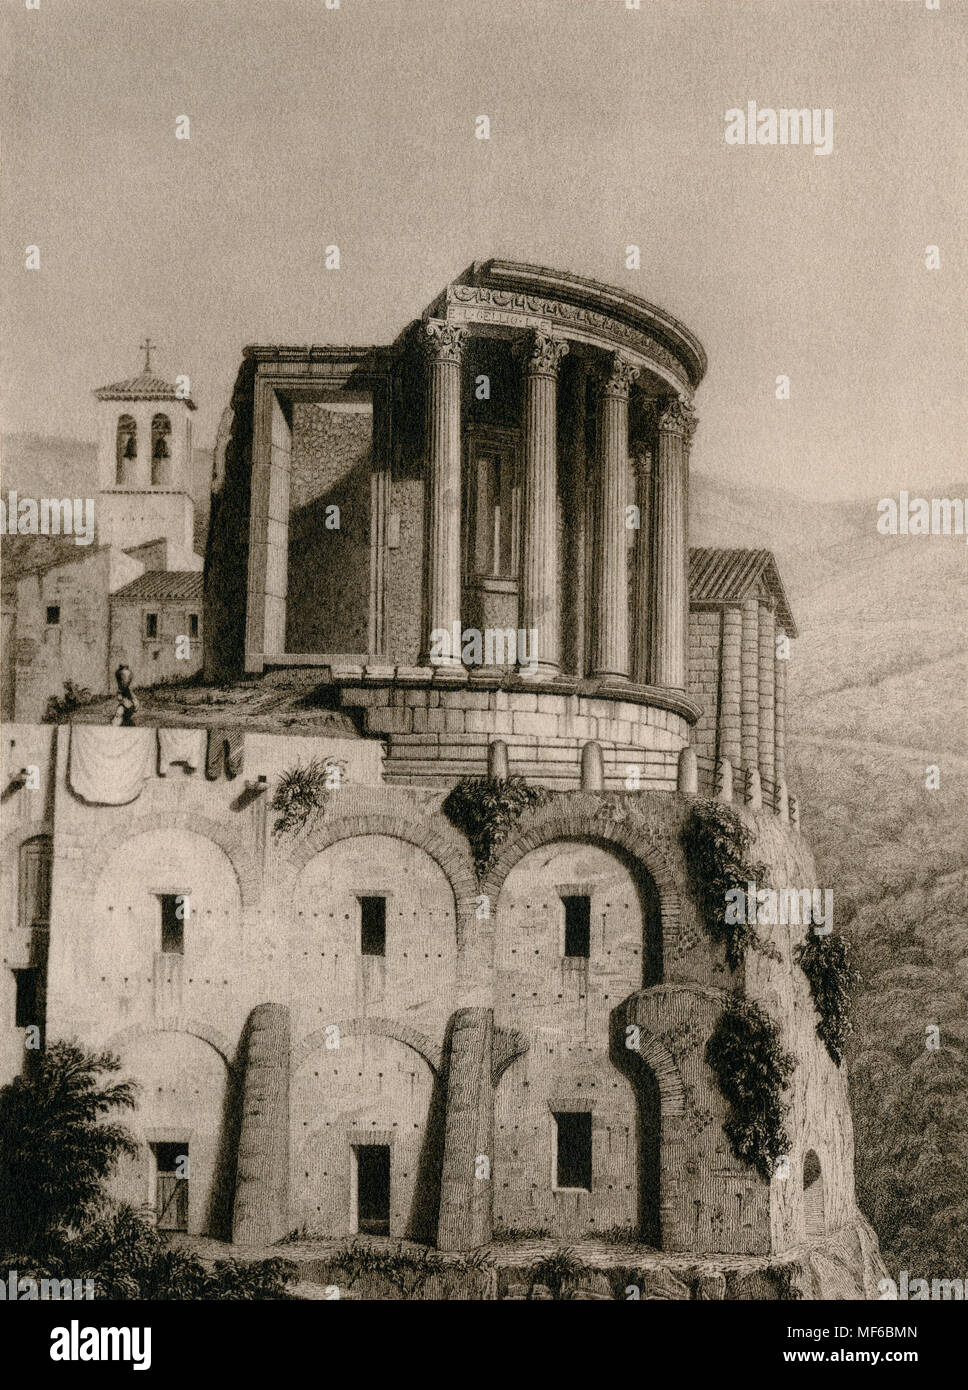 Ruins of the Roman Temple of Vesta at Tivoli (ancient Tibur), Italy, late 19th century. Photograph Stock Photo